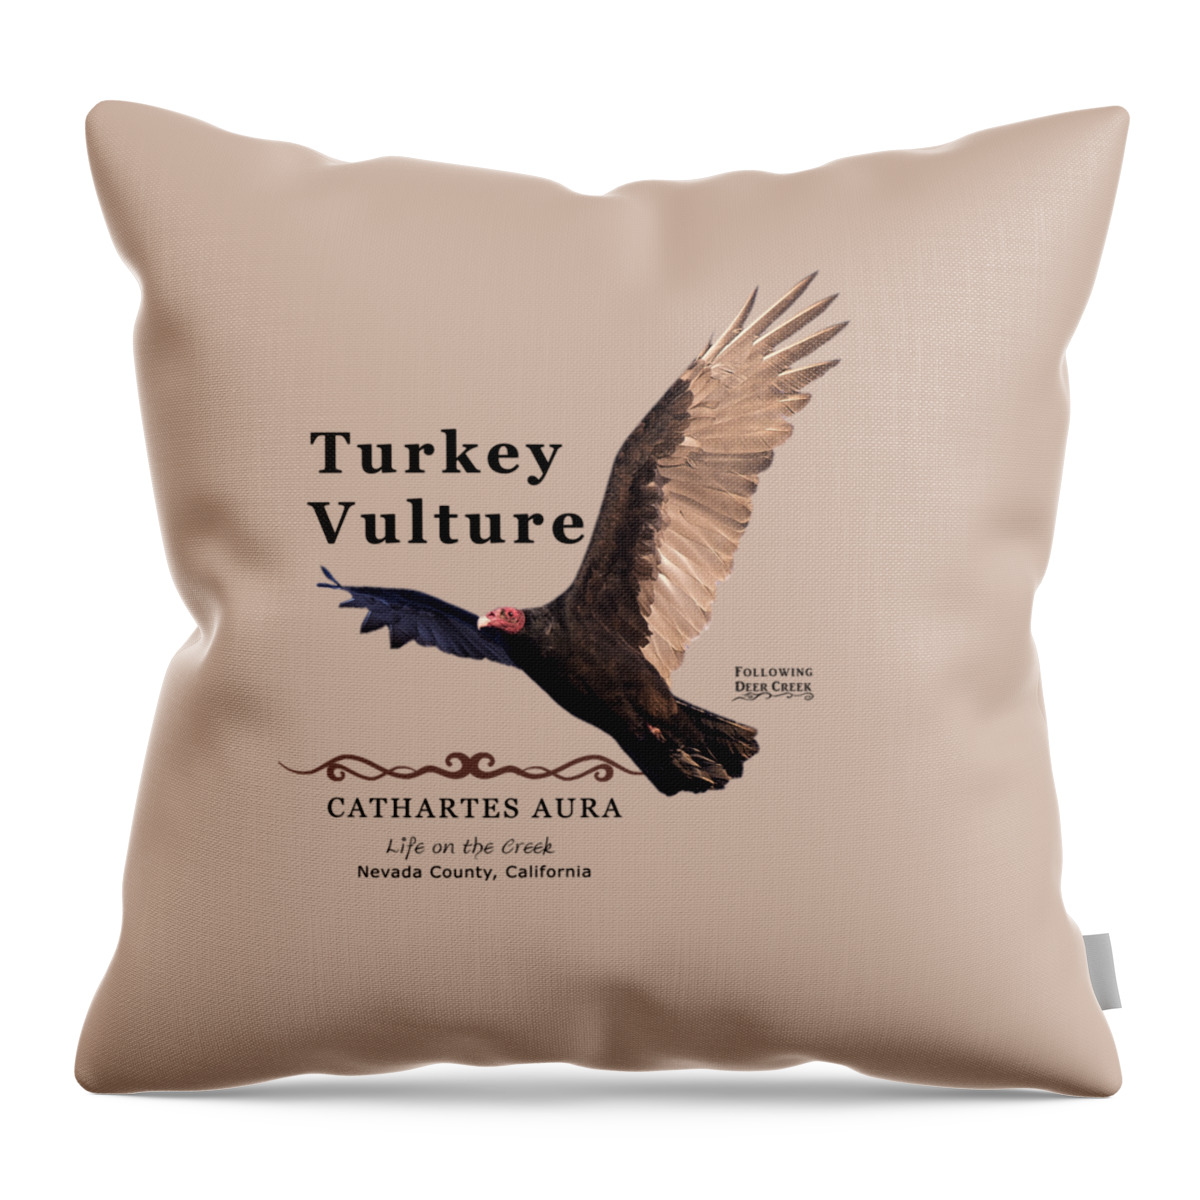 Turkey Vulture Throw Pillow featuring the digital art Turkey Vulture Cathartes aura by Lisa Redfern